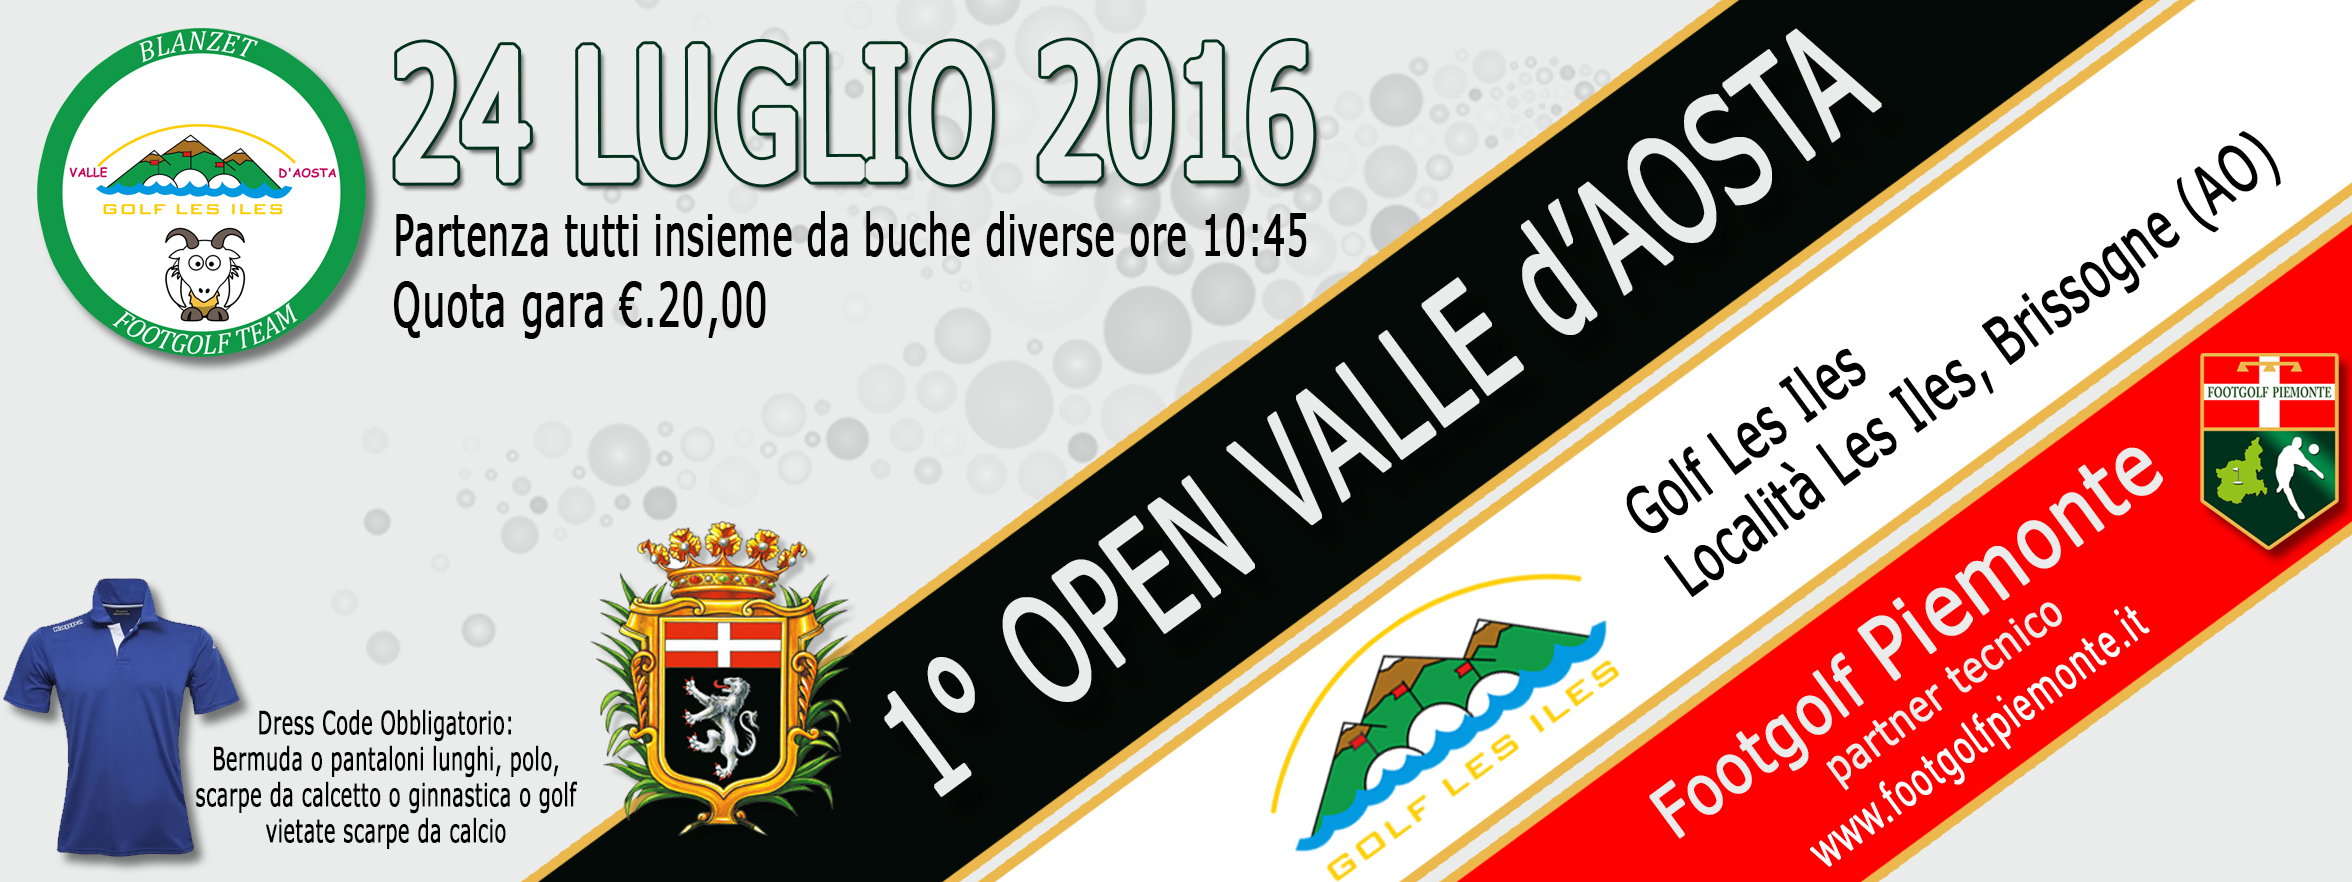 1 Open Footgolf Valle d'Aosta 24 Luglio 2016 banner